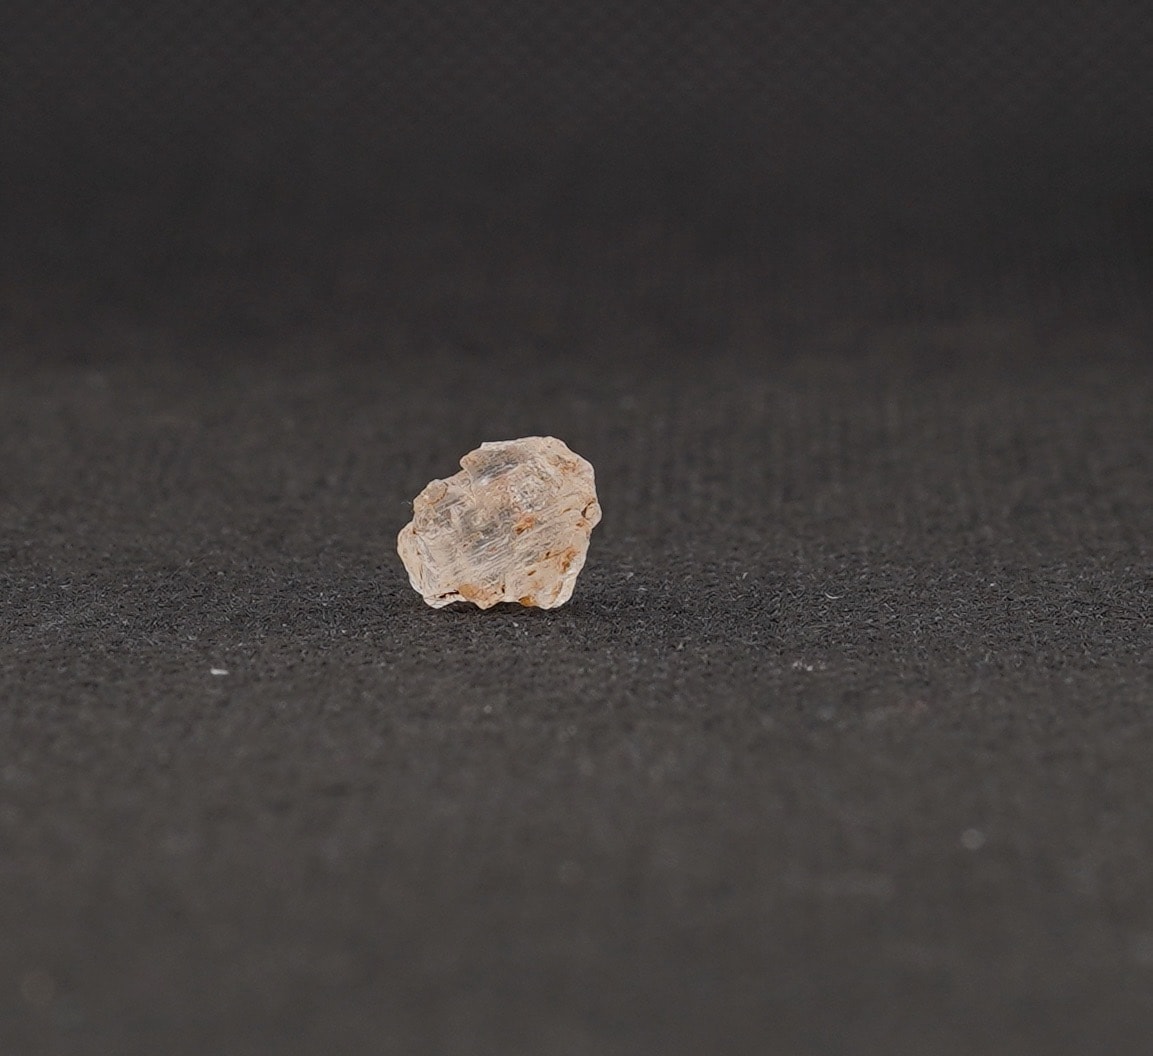 Fenacit nigerian cristal natural unicat f220